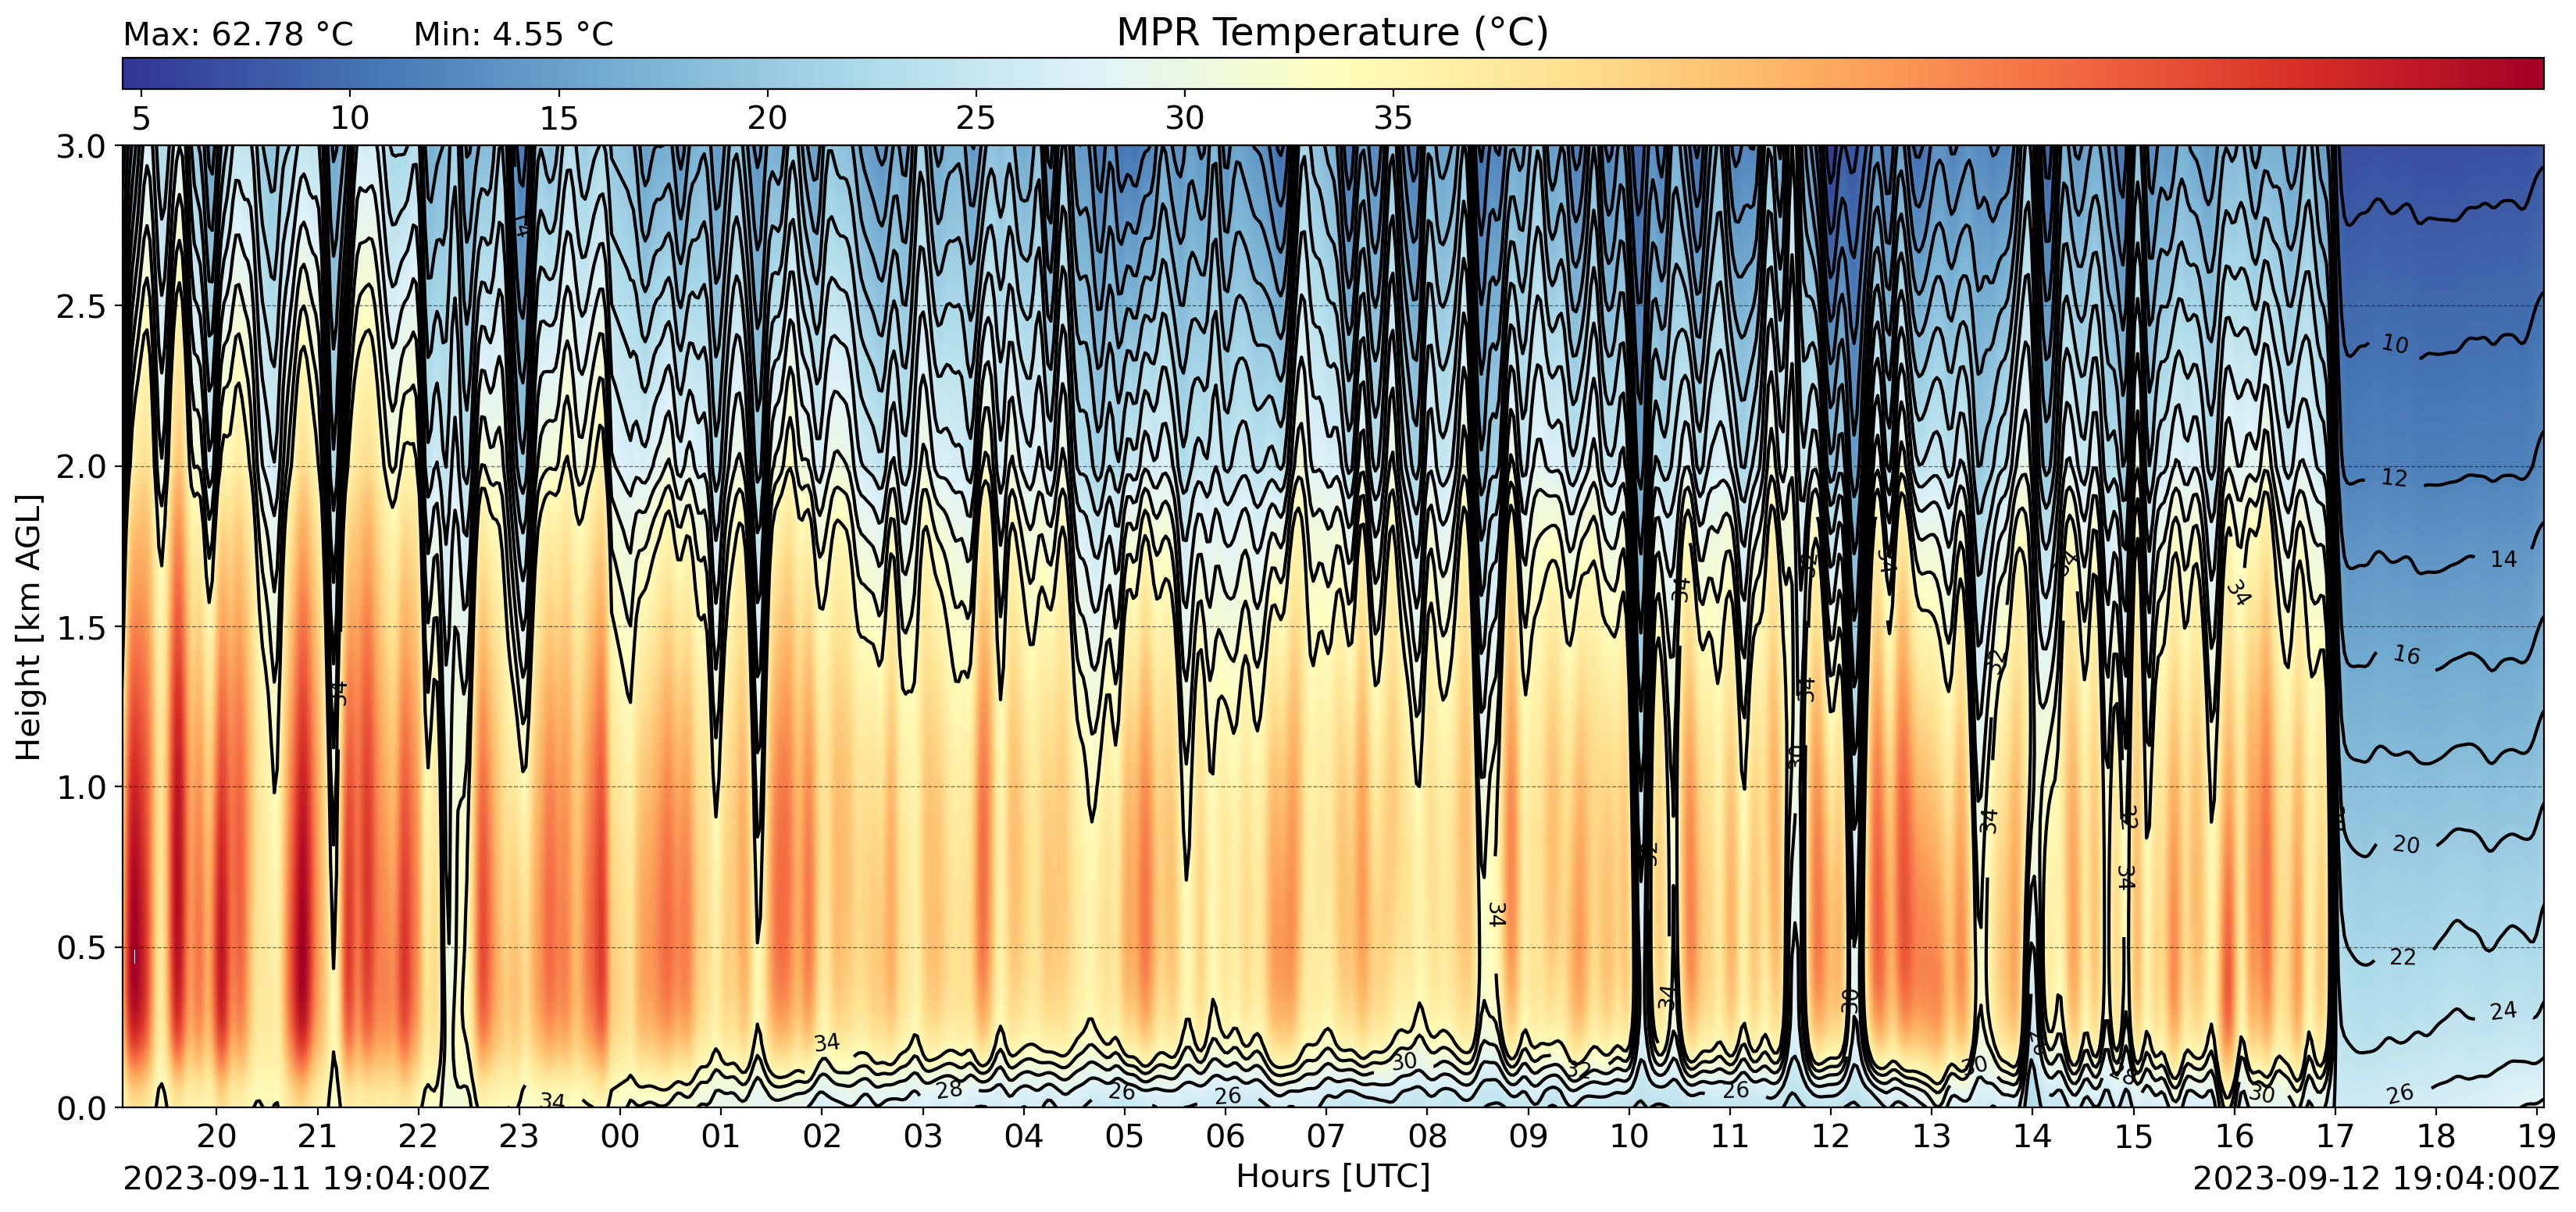 MPR Temperature